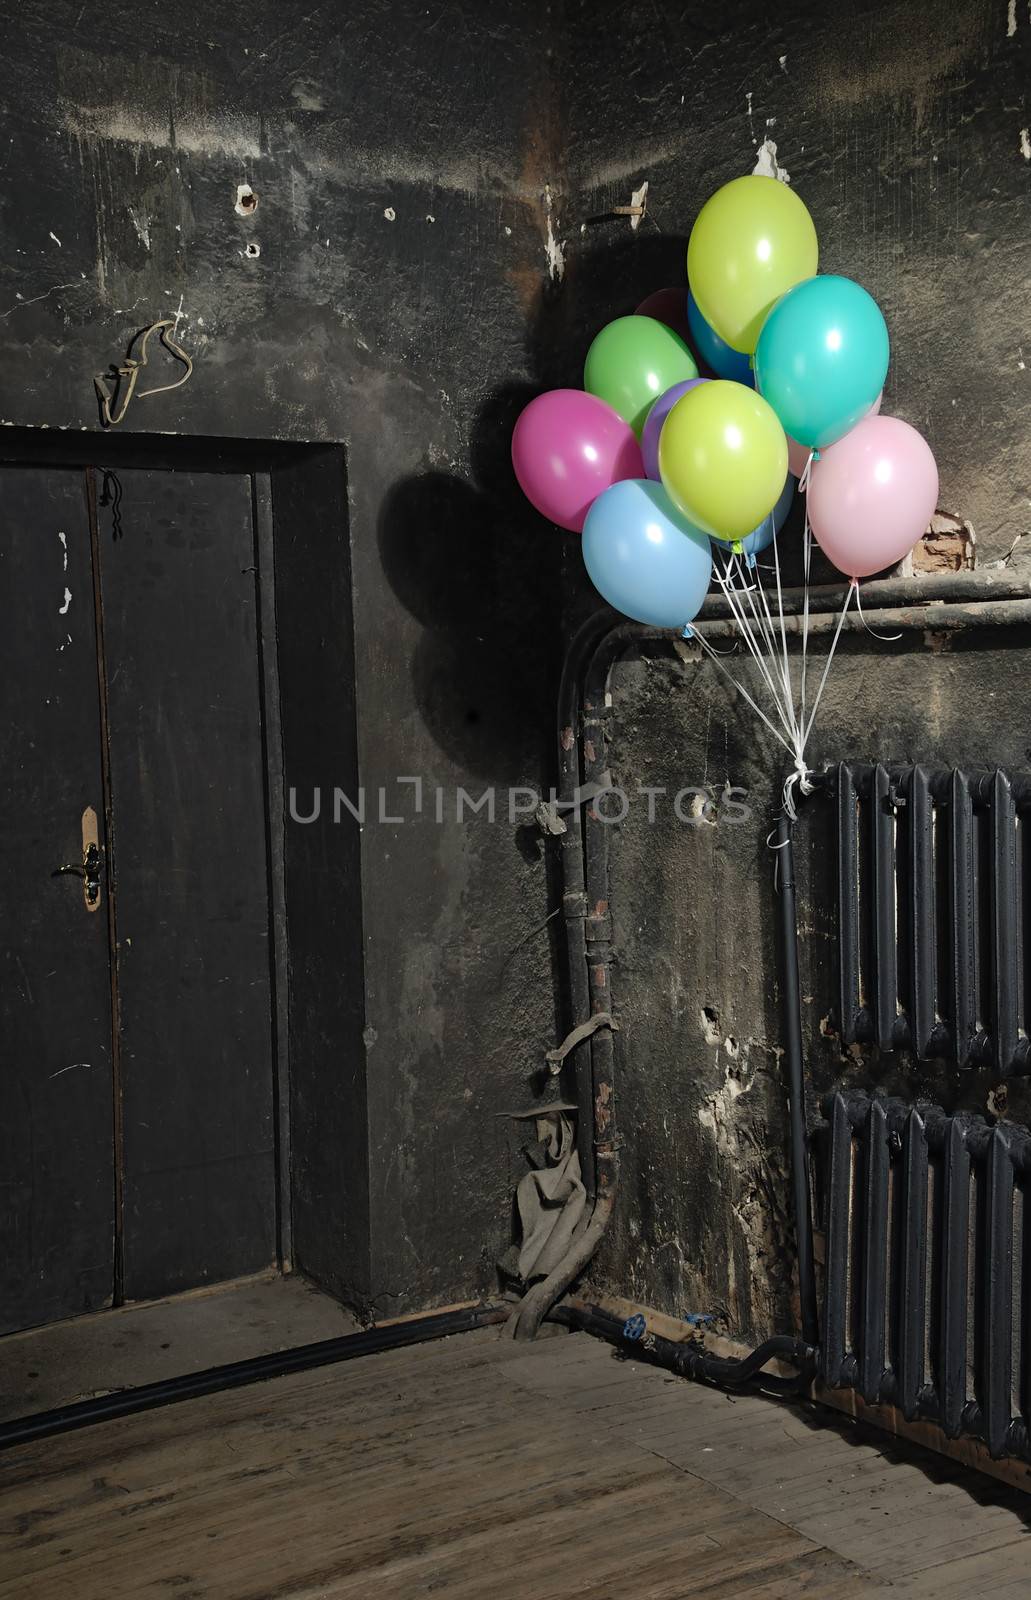 Celebrating colorful balloons in trashy dark interrior for Halloween